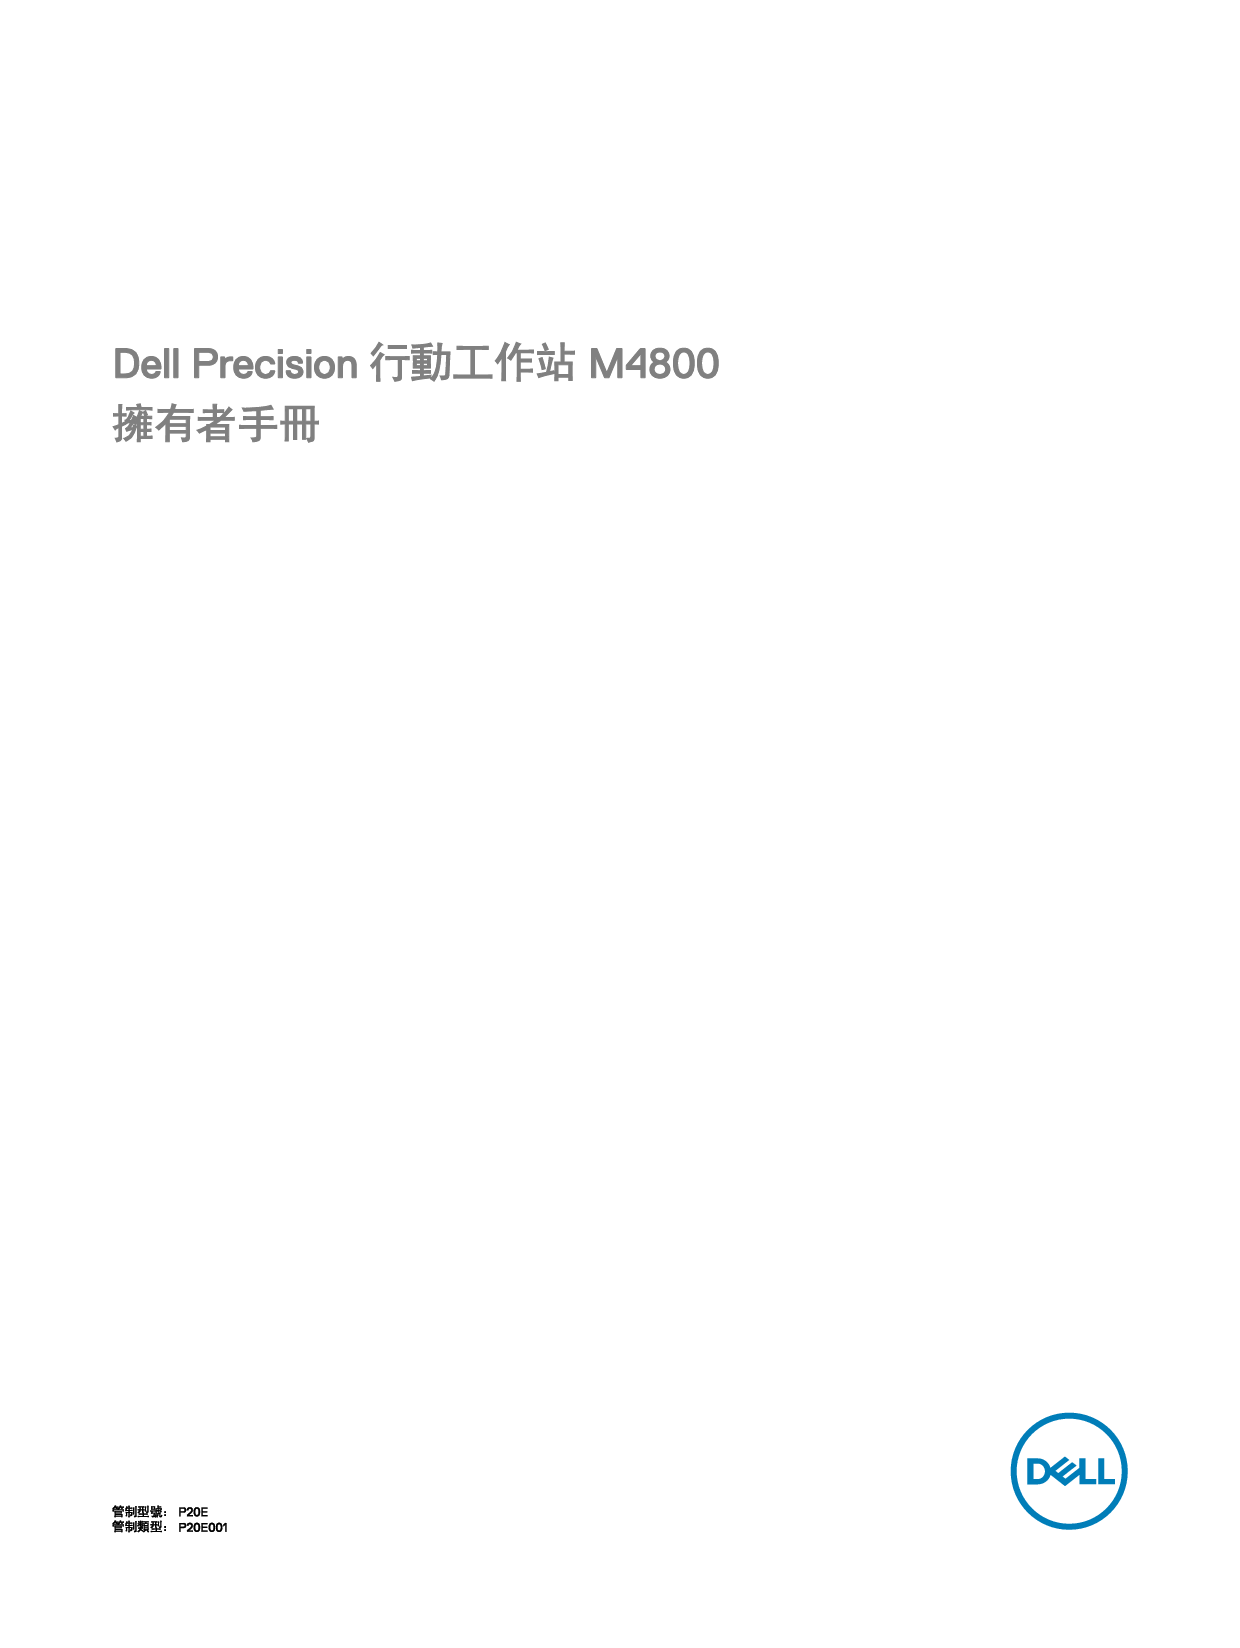 戴尔 Dell Precision M4800 繁体 用户手册 封面